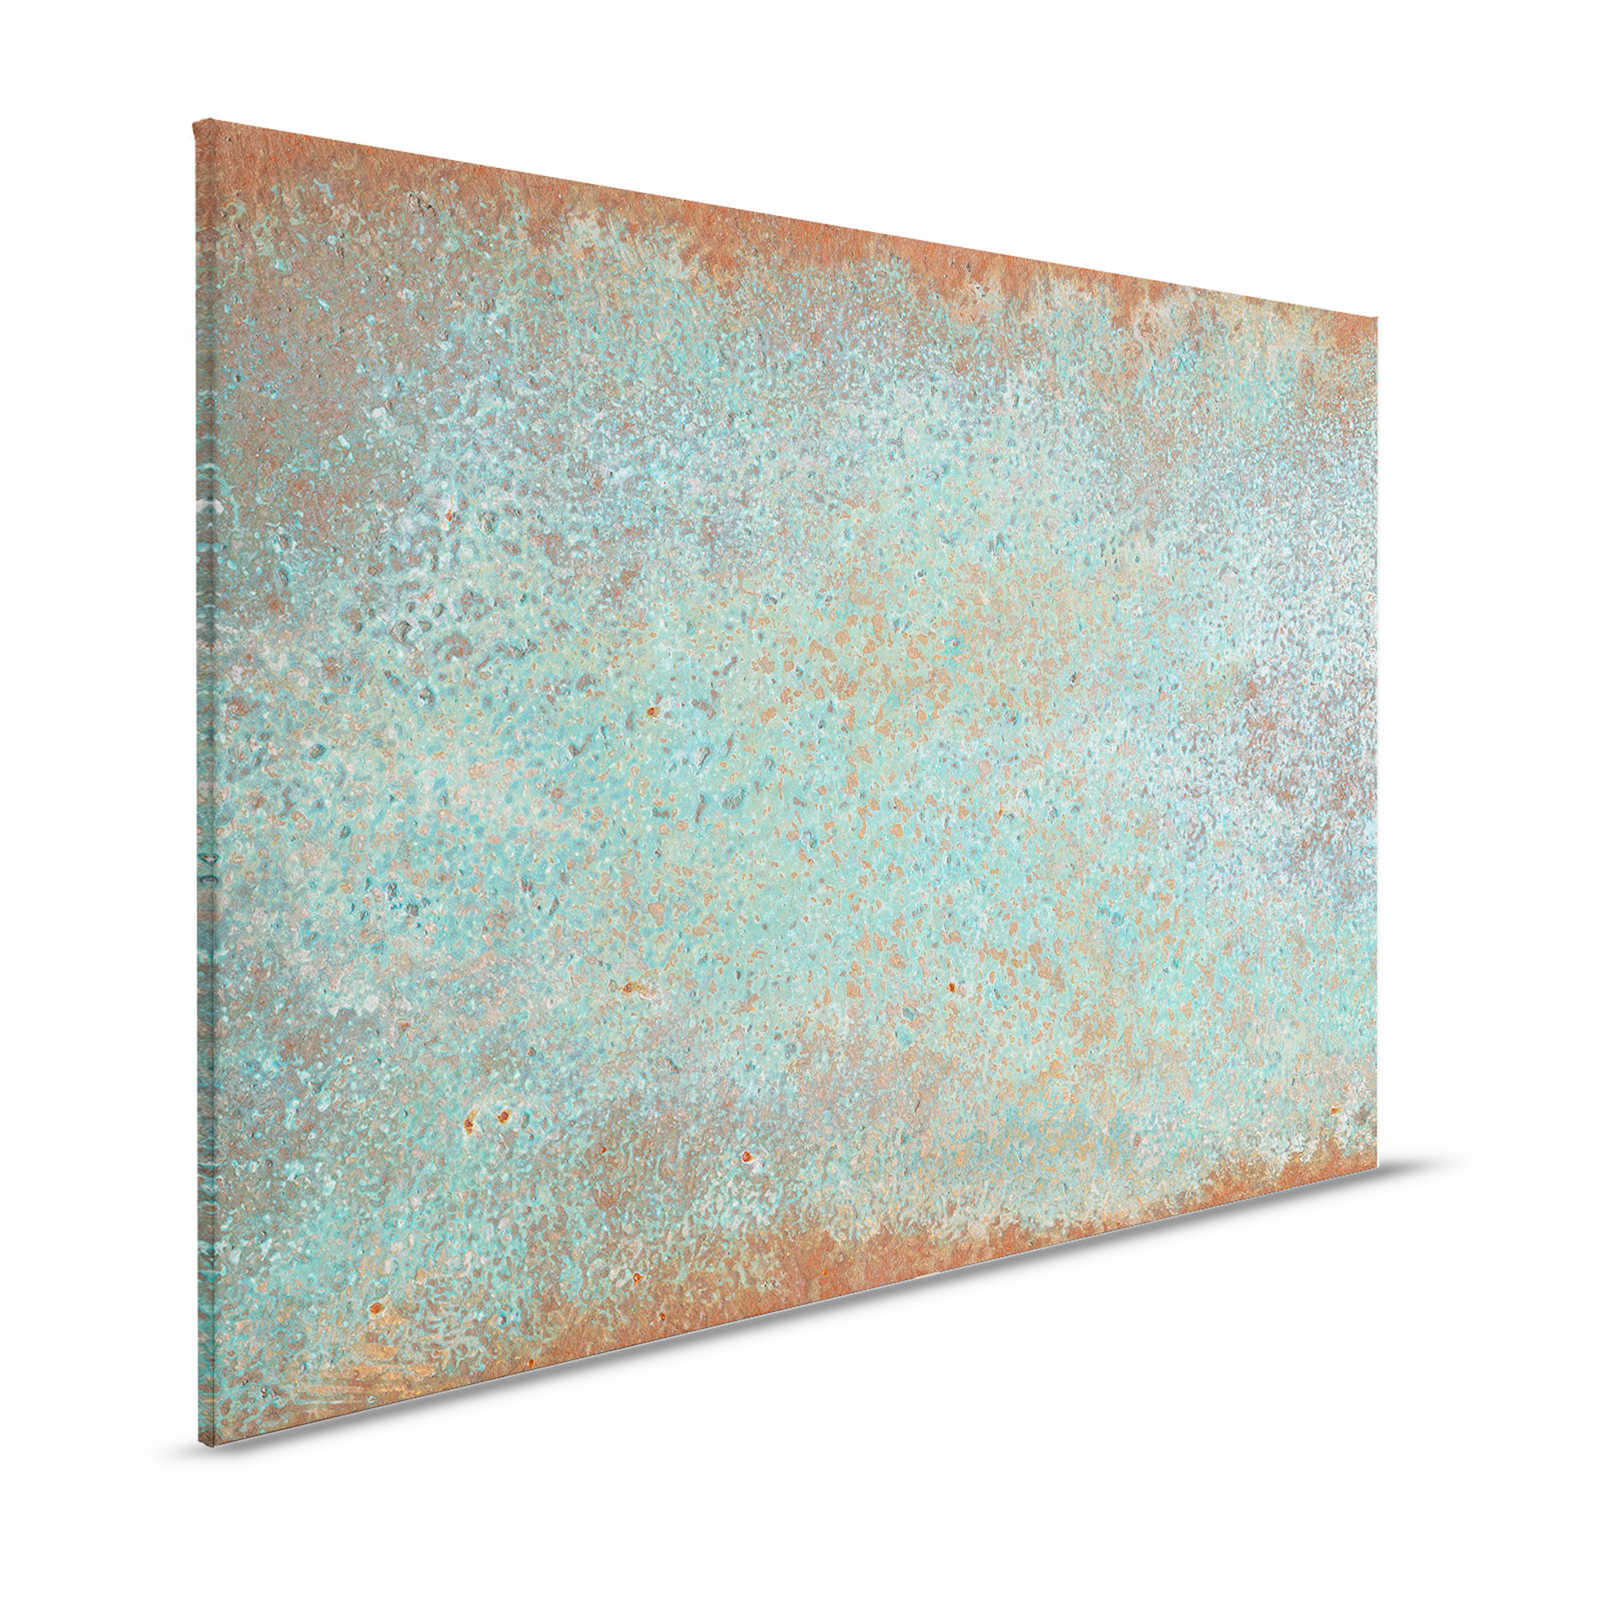 Metal Optics Canvas Schilderij Turquoise Patina met Roest - 1.20 m x 0.80 m
